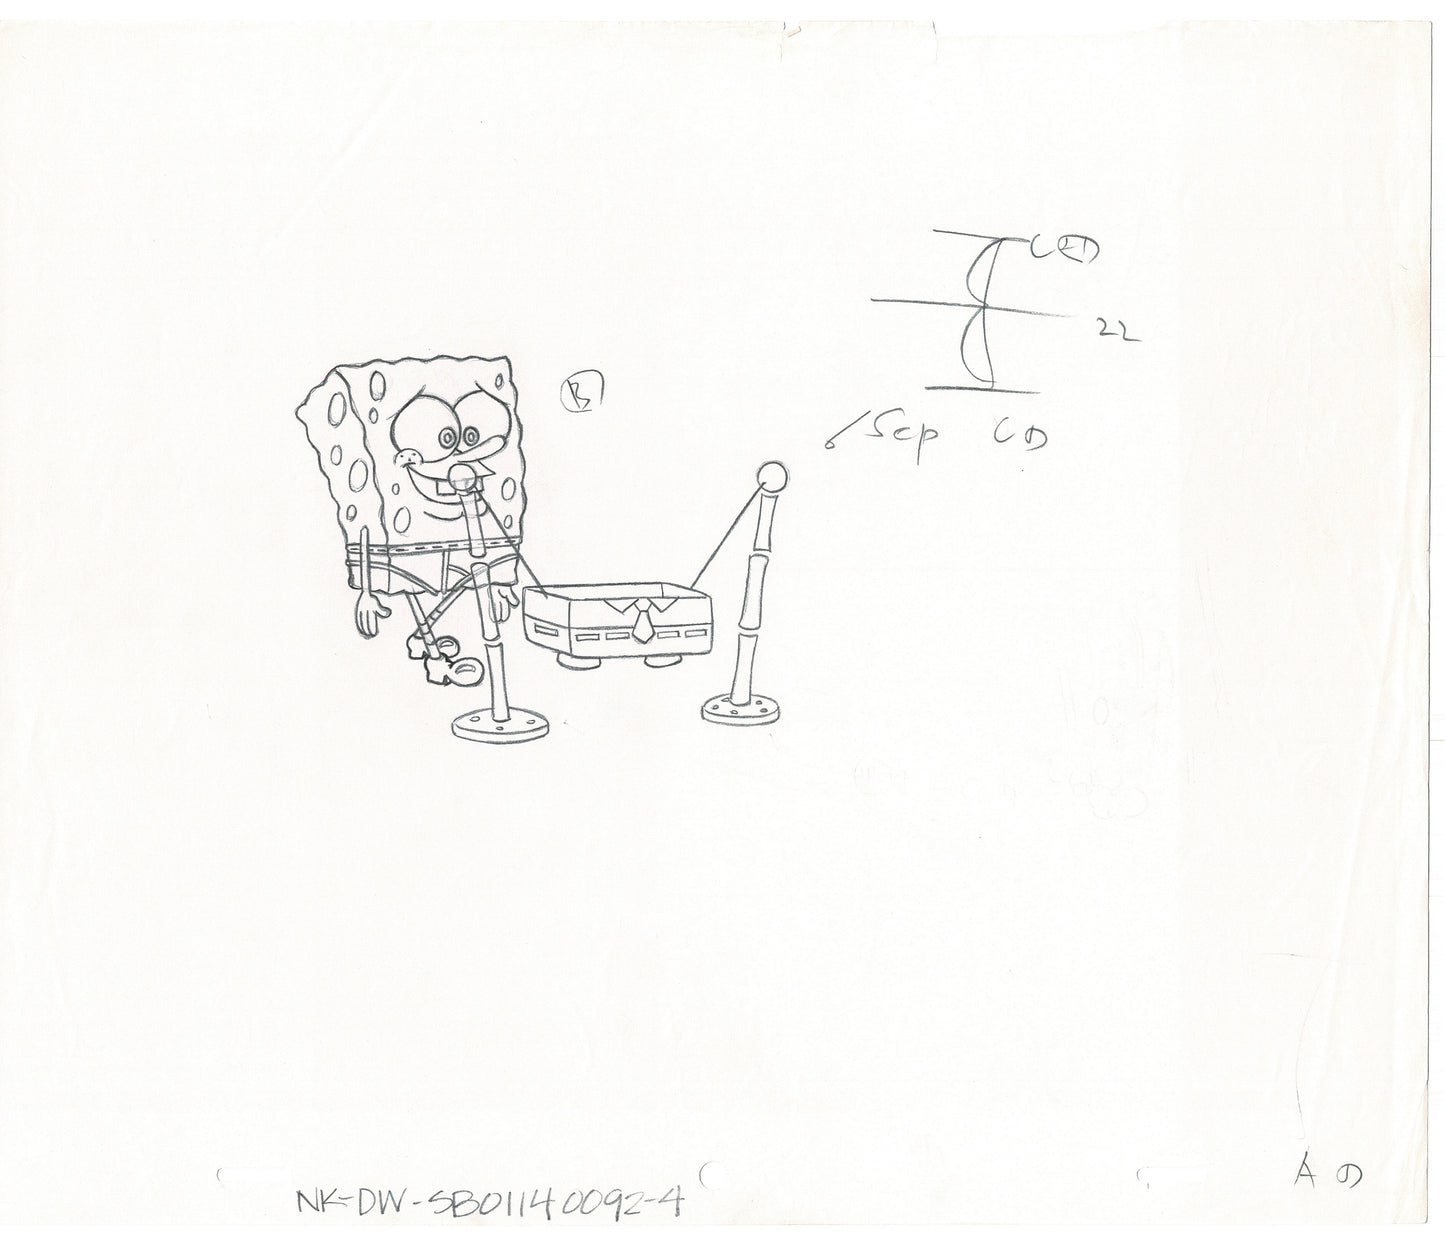 Spongebob Squarepants Production Animation Cel Drawing Nickelodeon 1999-2014 A-6